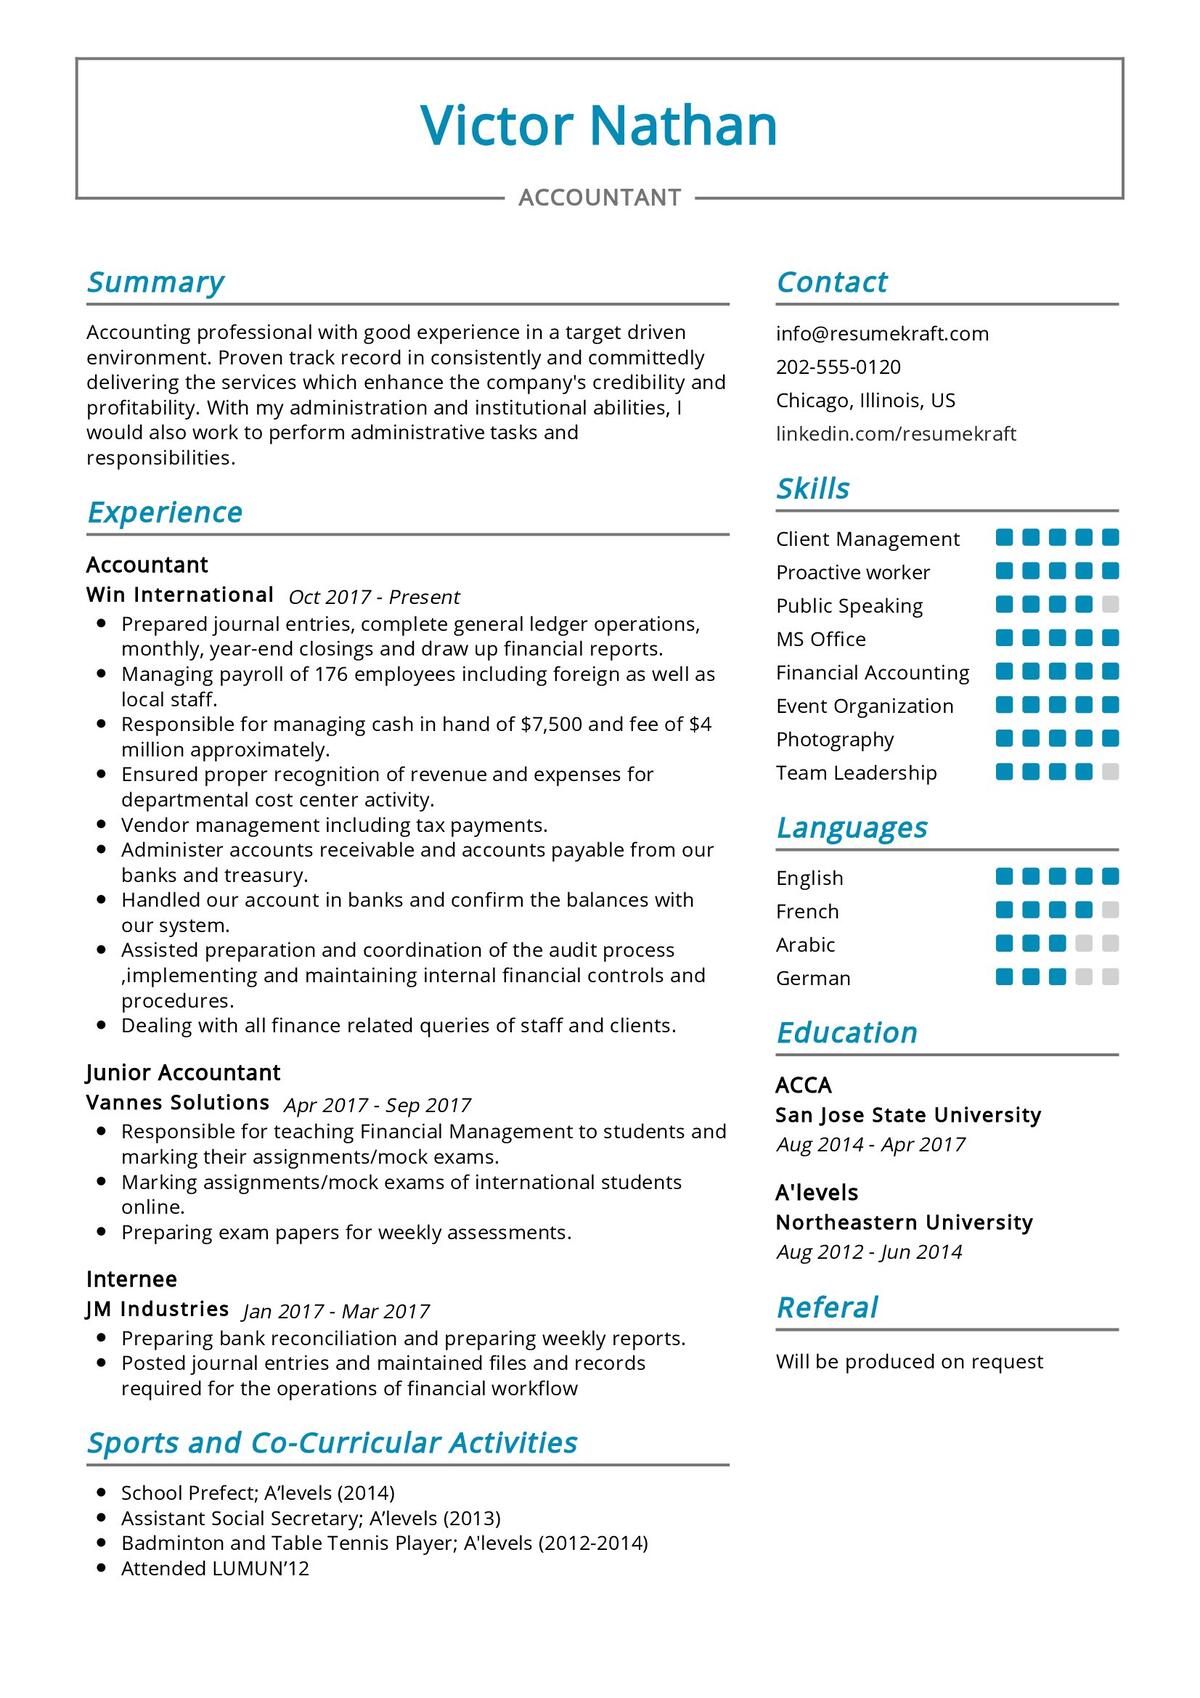 Accountant CV Sample 